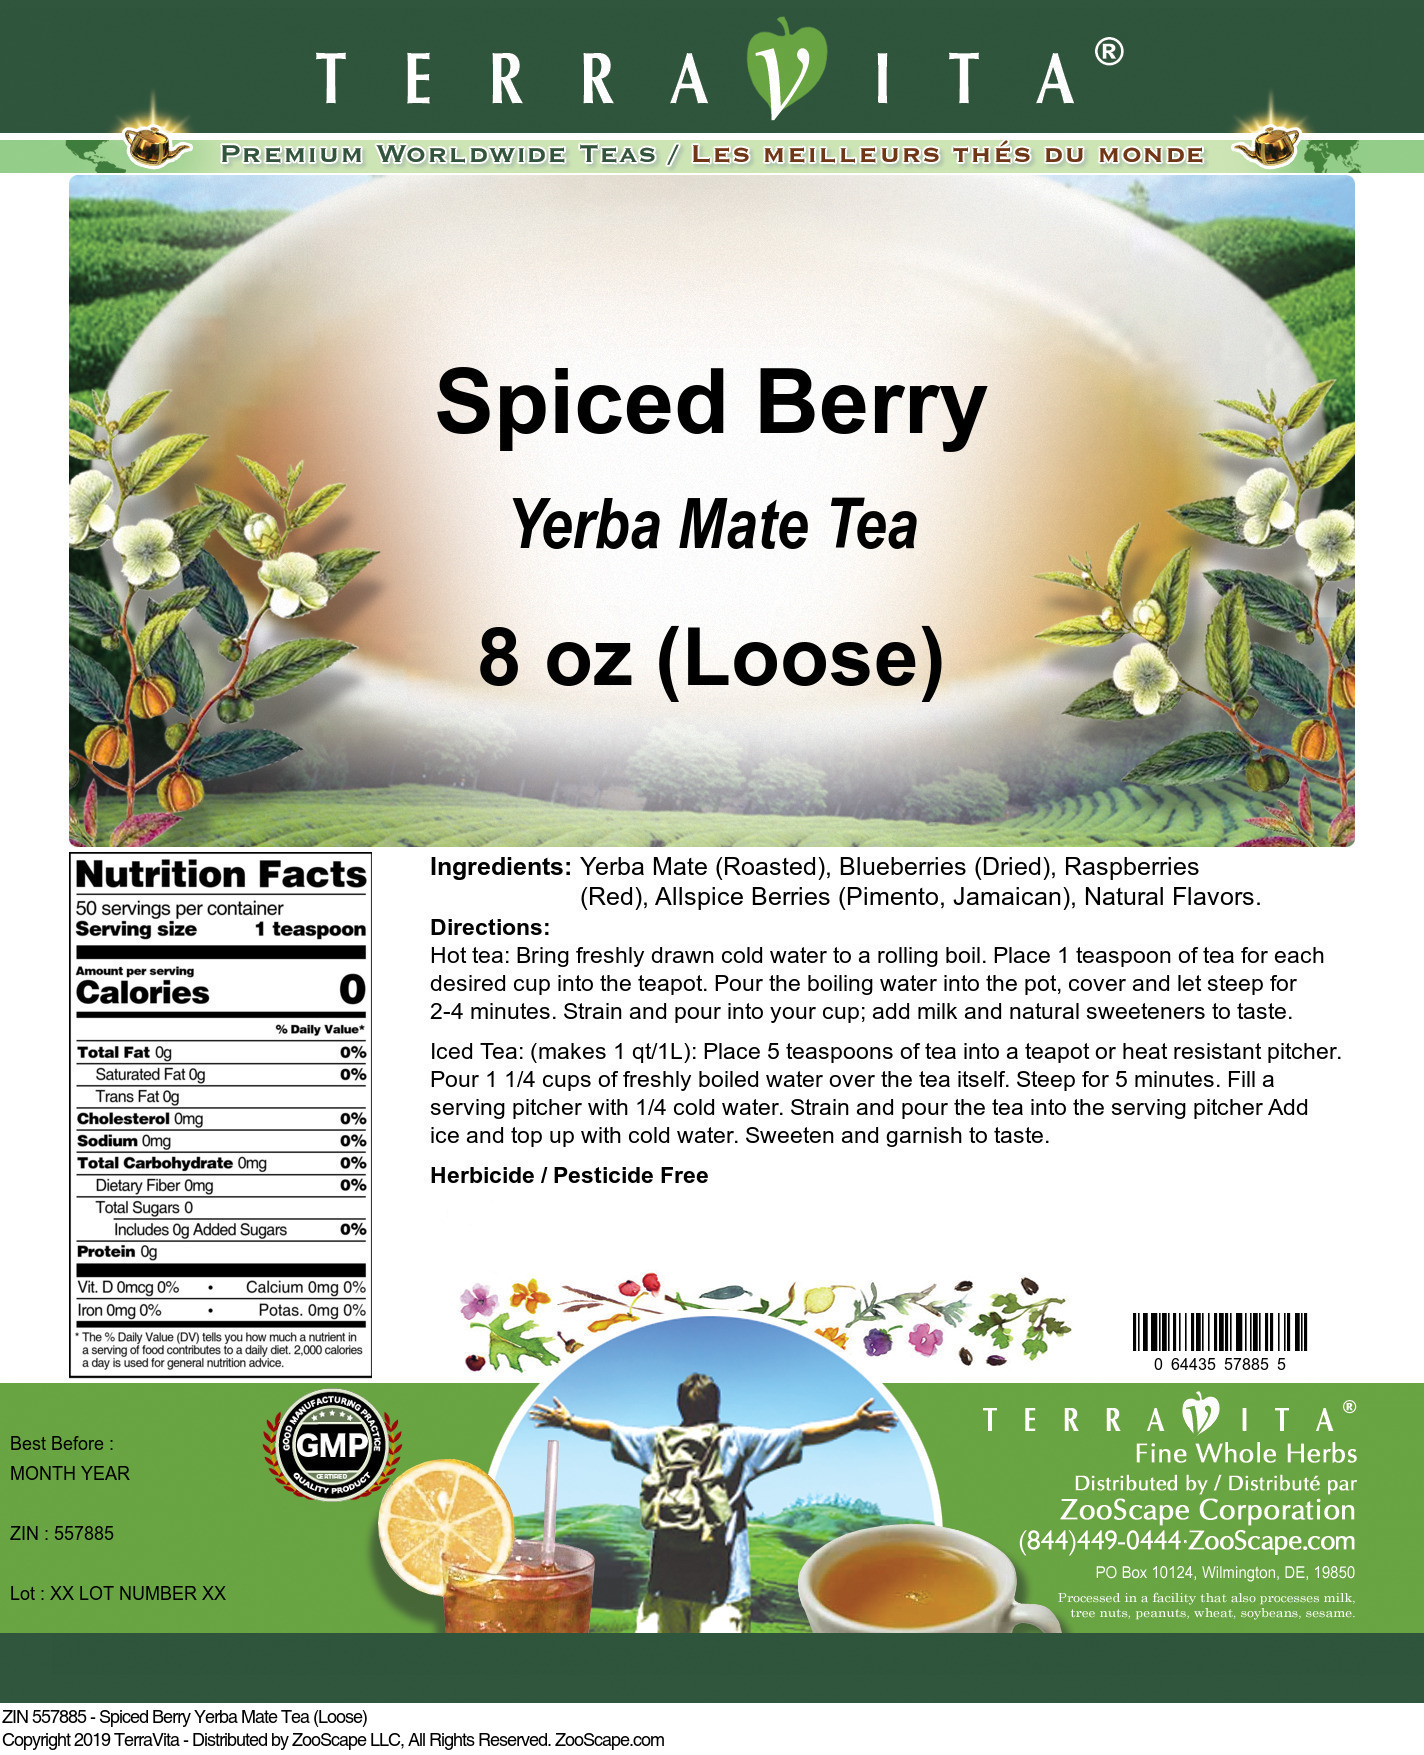 Spiced Berry Yerba Mate Tea (Loose) - Label